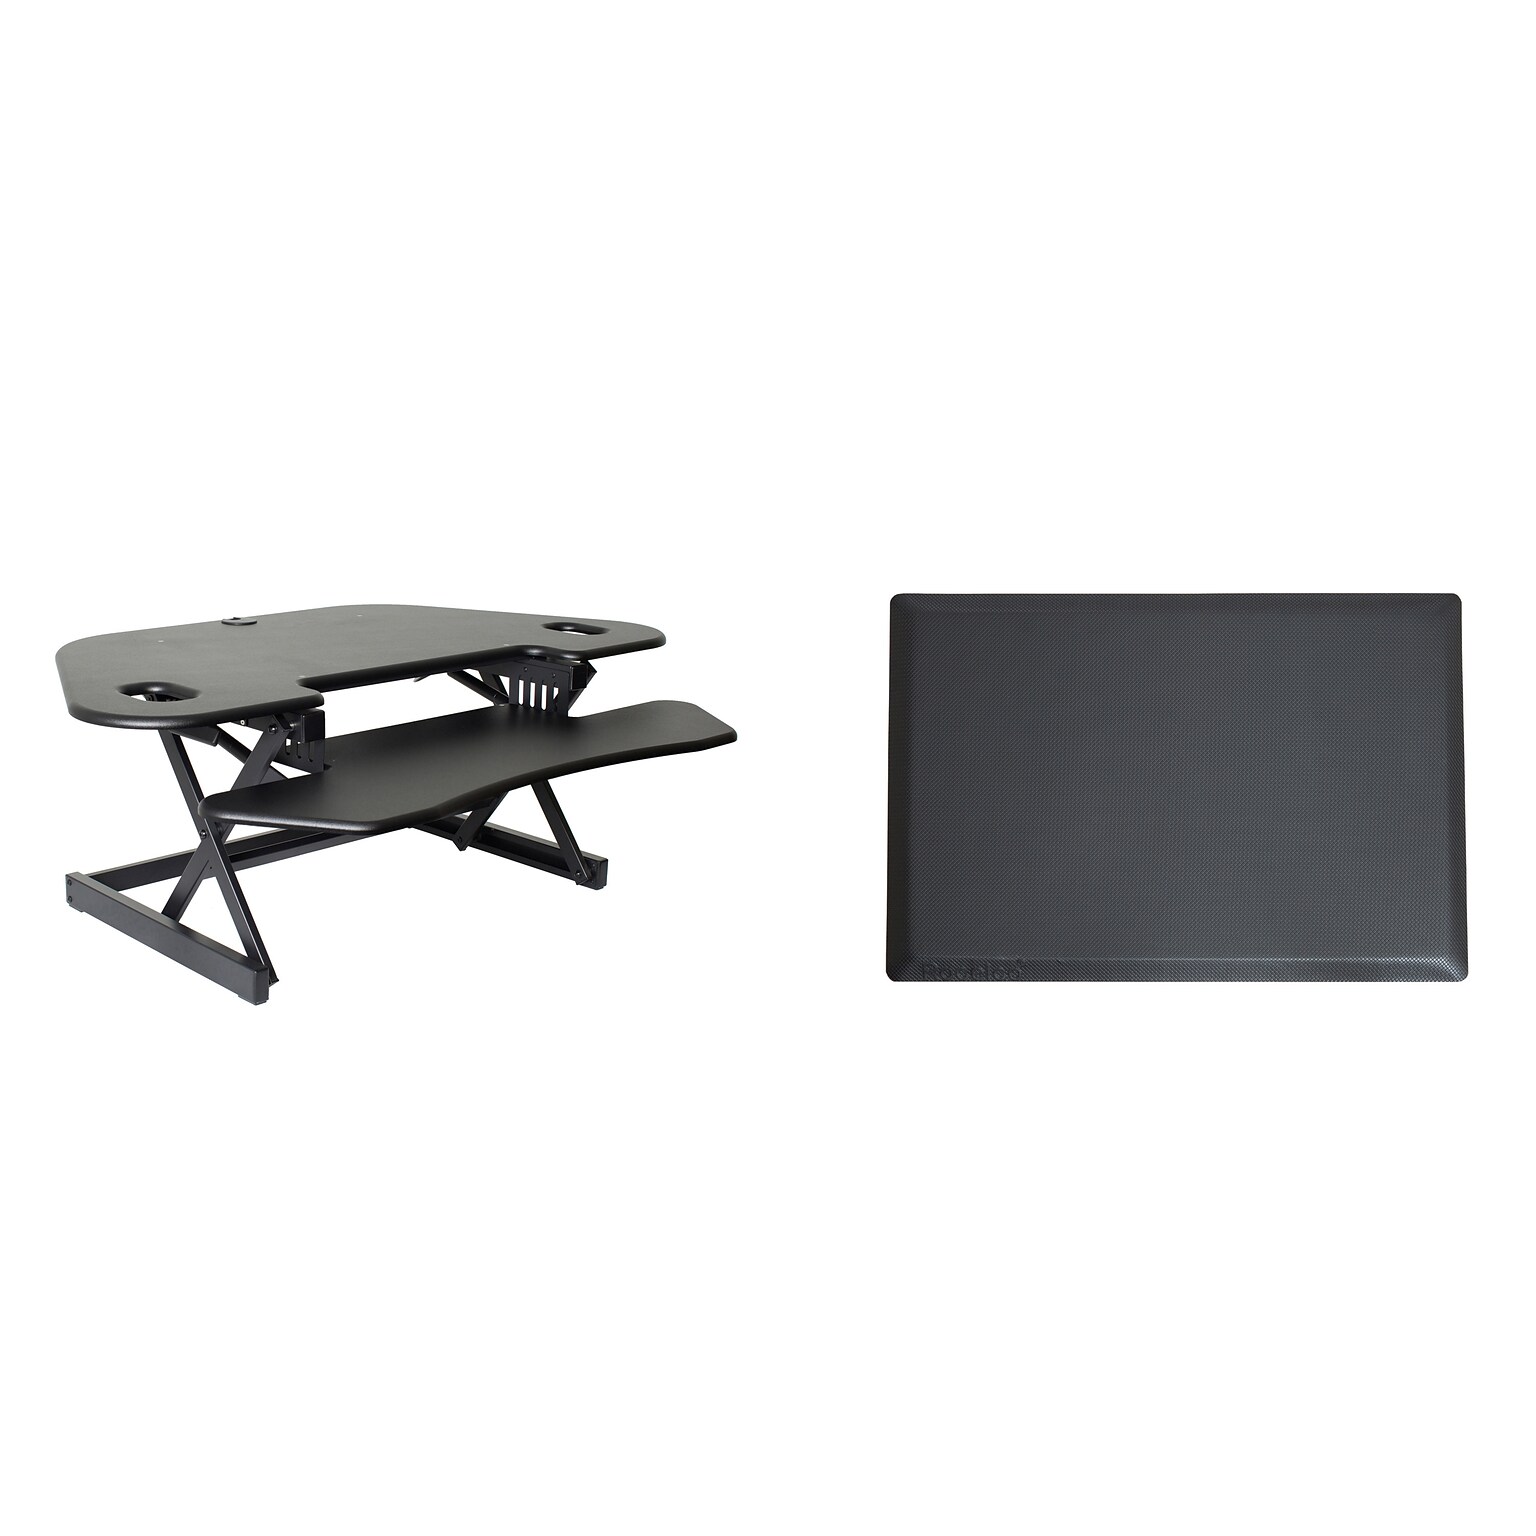 Rocelco 46W 5-18H Adjustable Corner Standing Desk Converter with Anti Fatigue Mat, Black (R CADRB-46-MAFM)